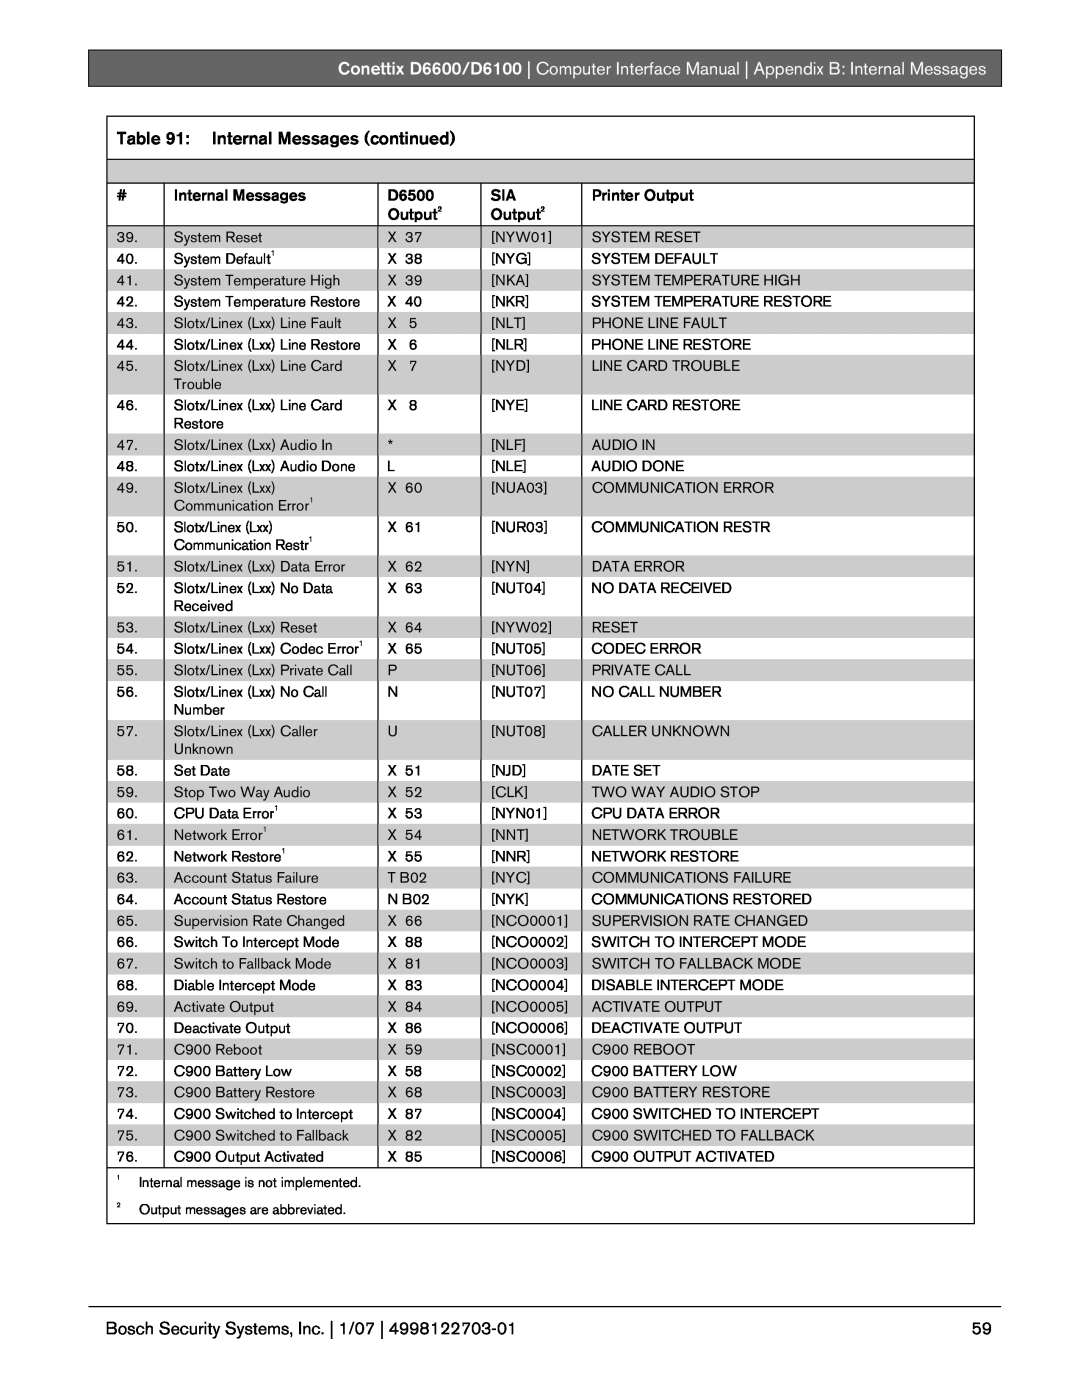 Bosch Appliances D6100, D6600 manual Internal Messages continued, Bosch Security Systems, Inc. | 1/07 